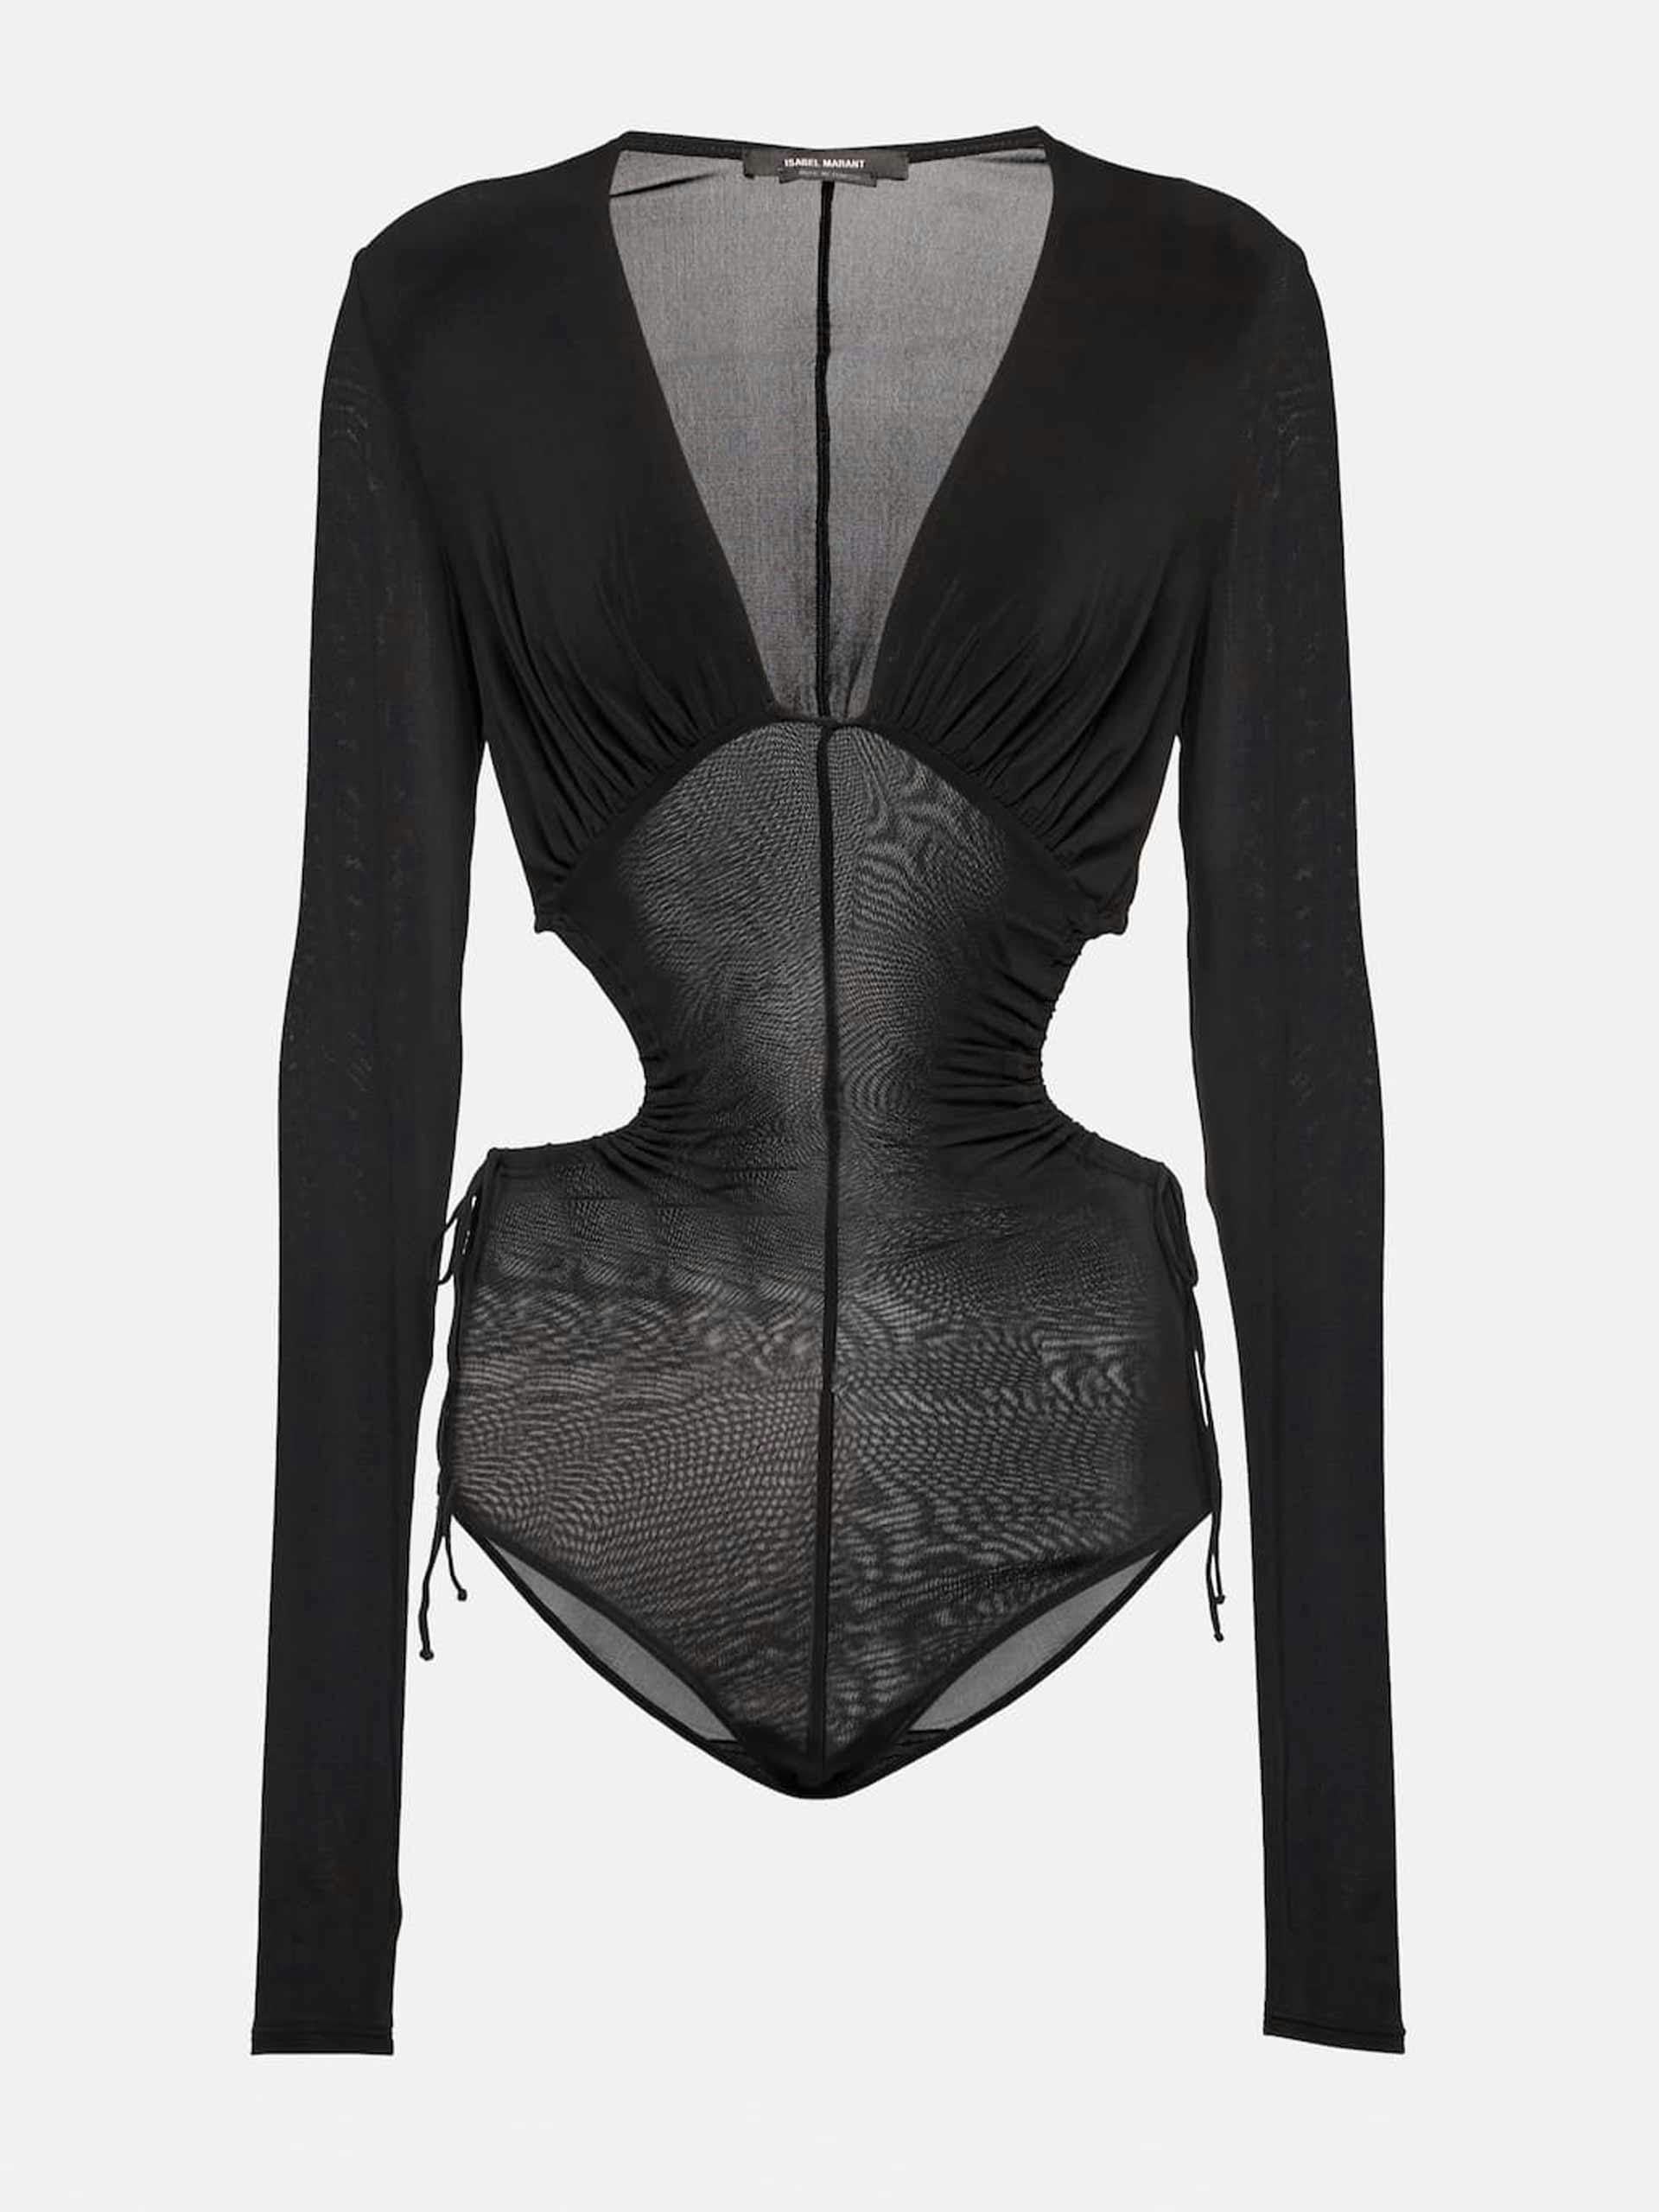 Jorja cutout bodysuit in black